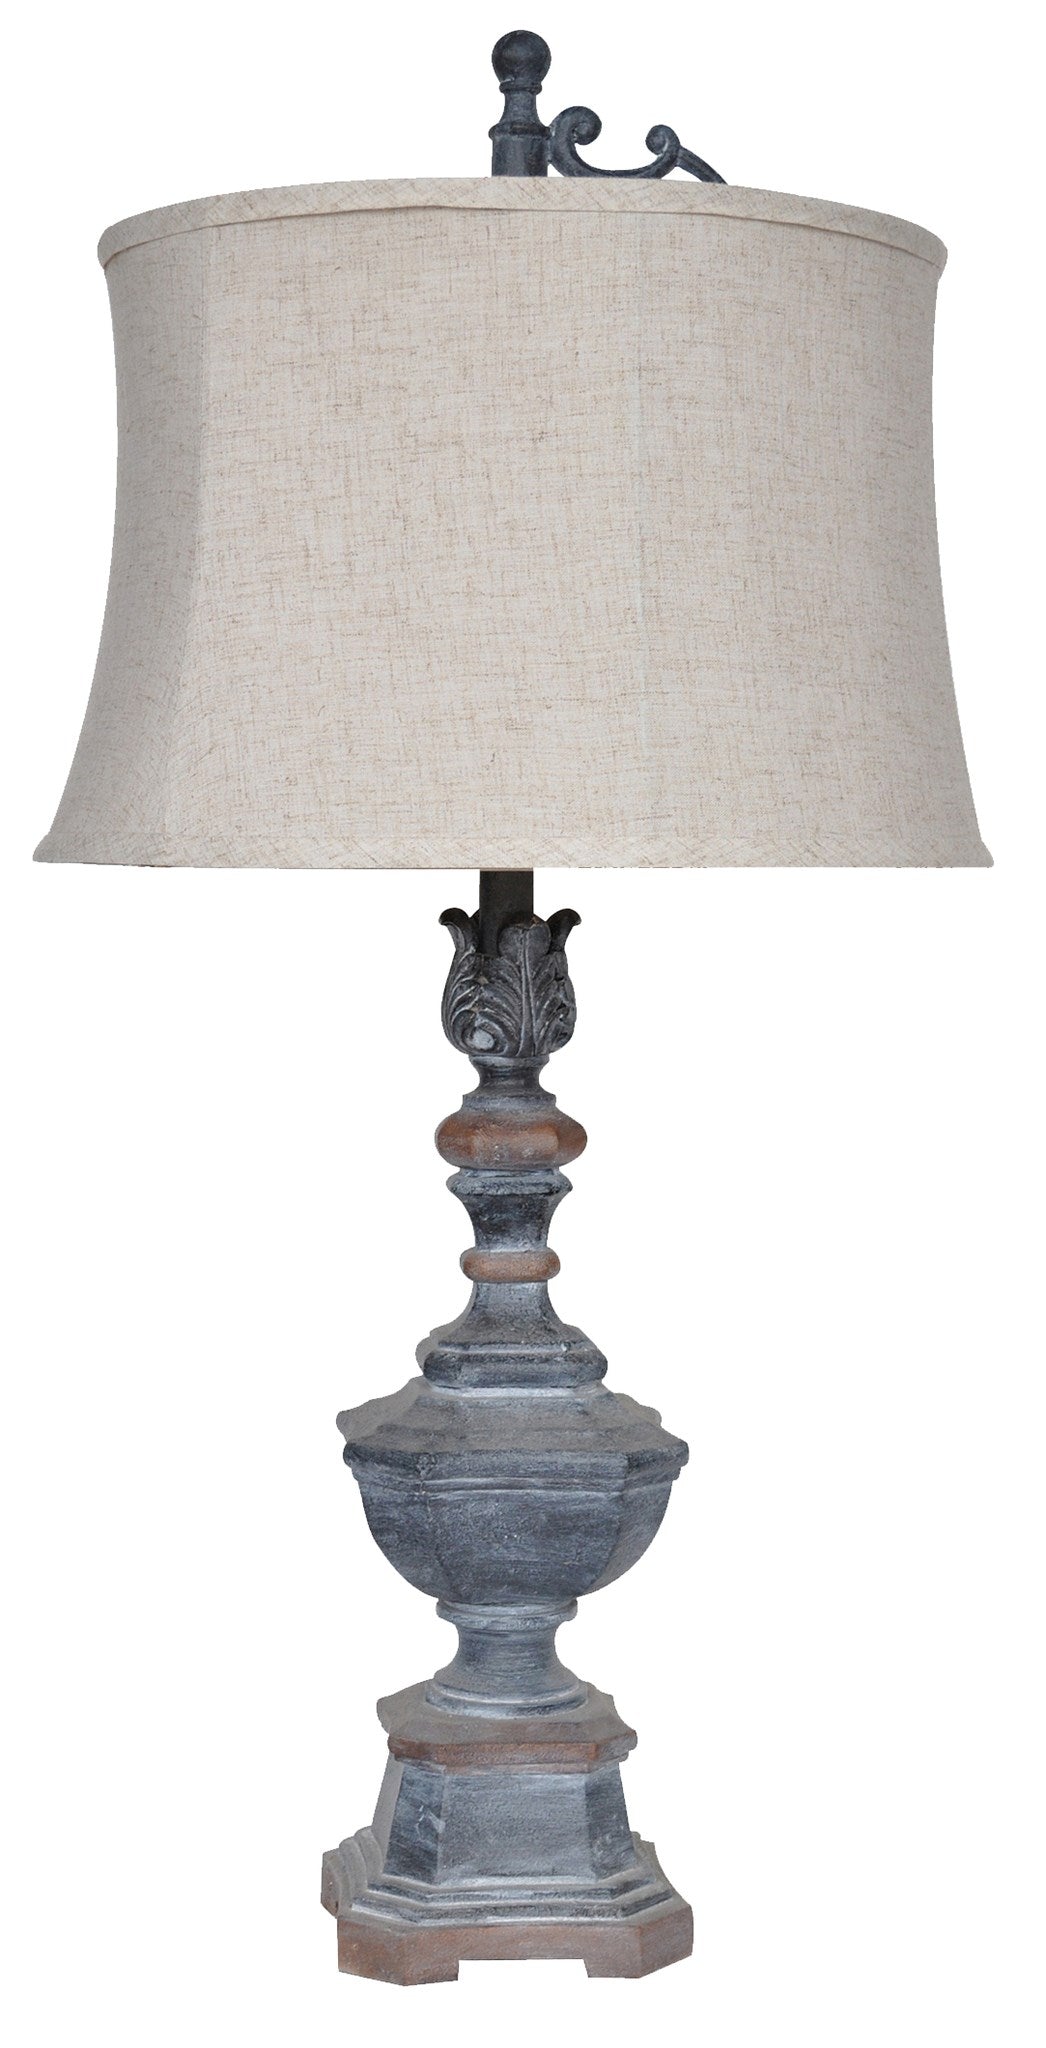 Willa Table Lamp